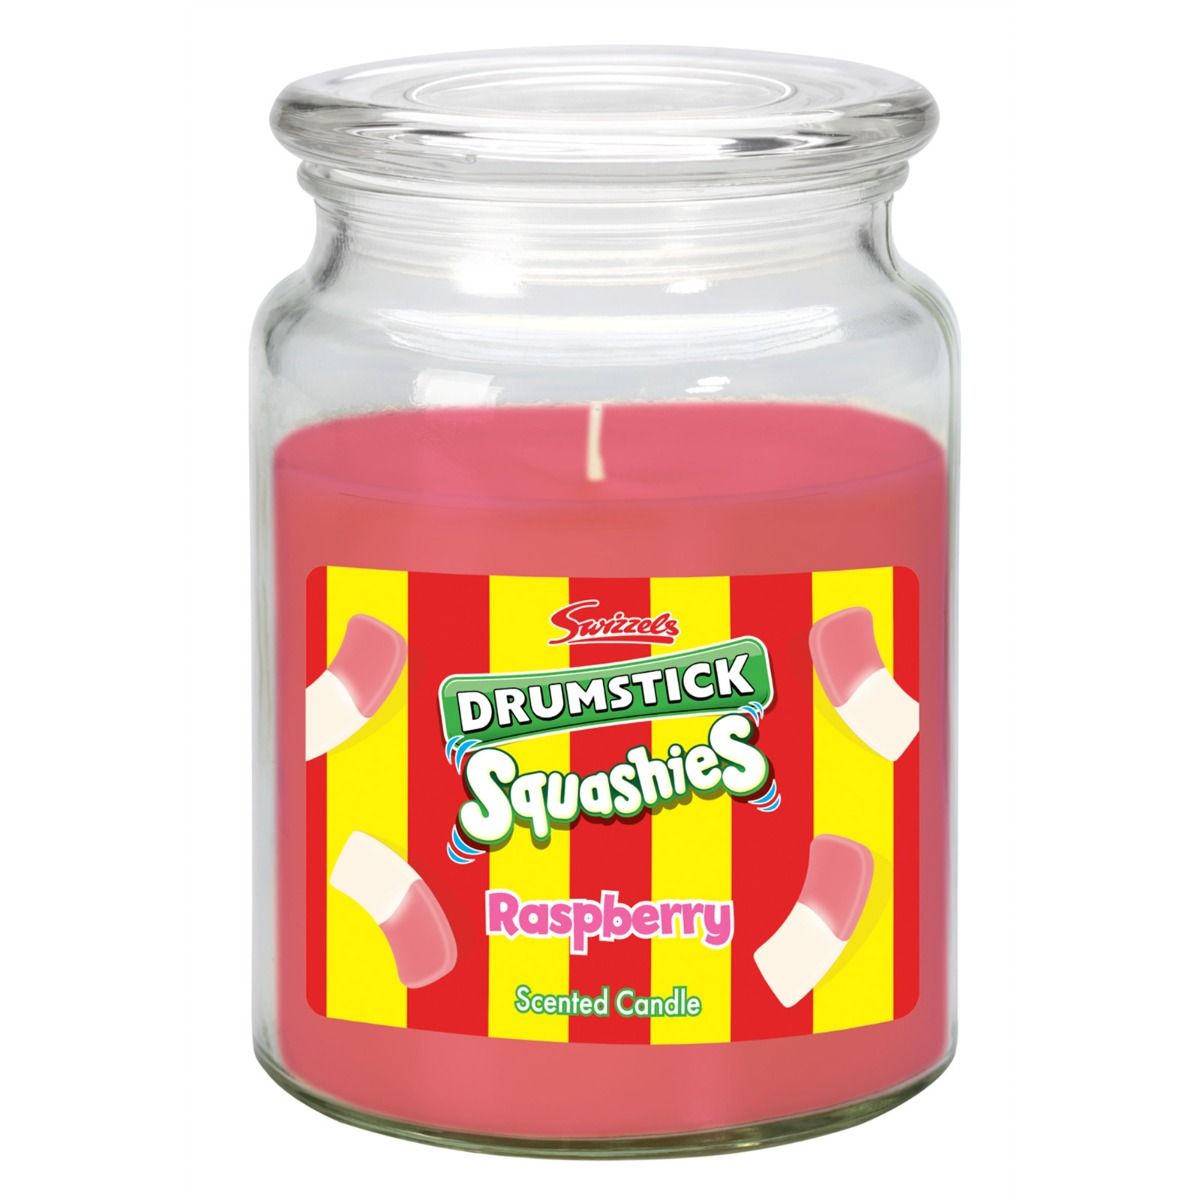 Swizzels 18oz Jar Candle - Drumstick Squashies Raspberry